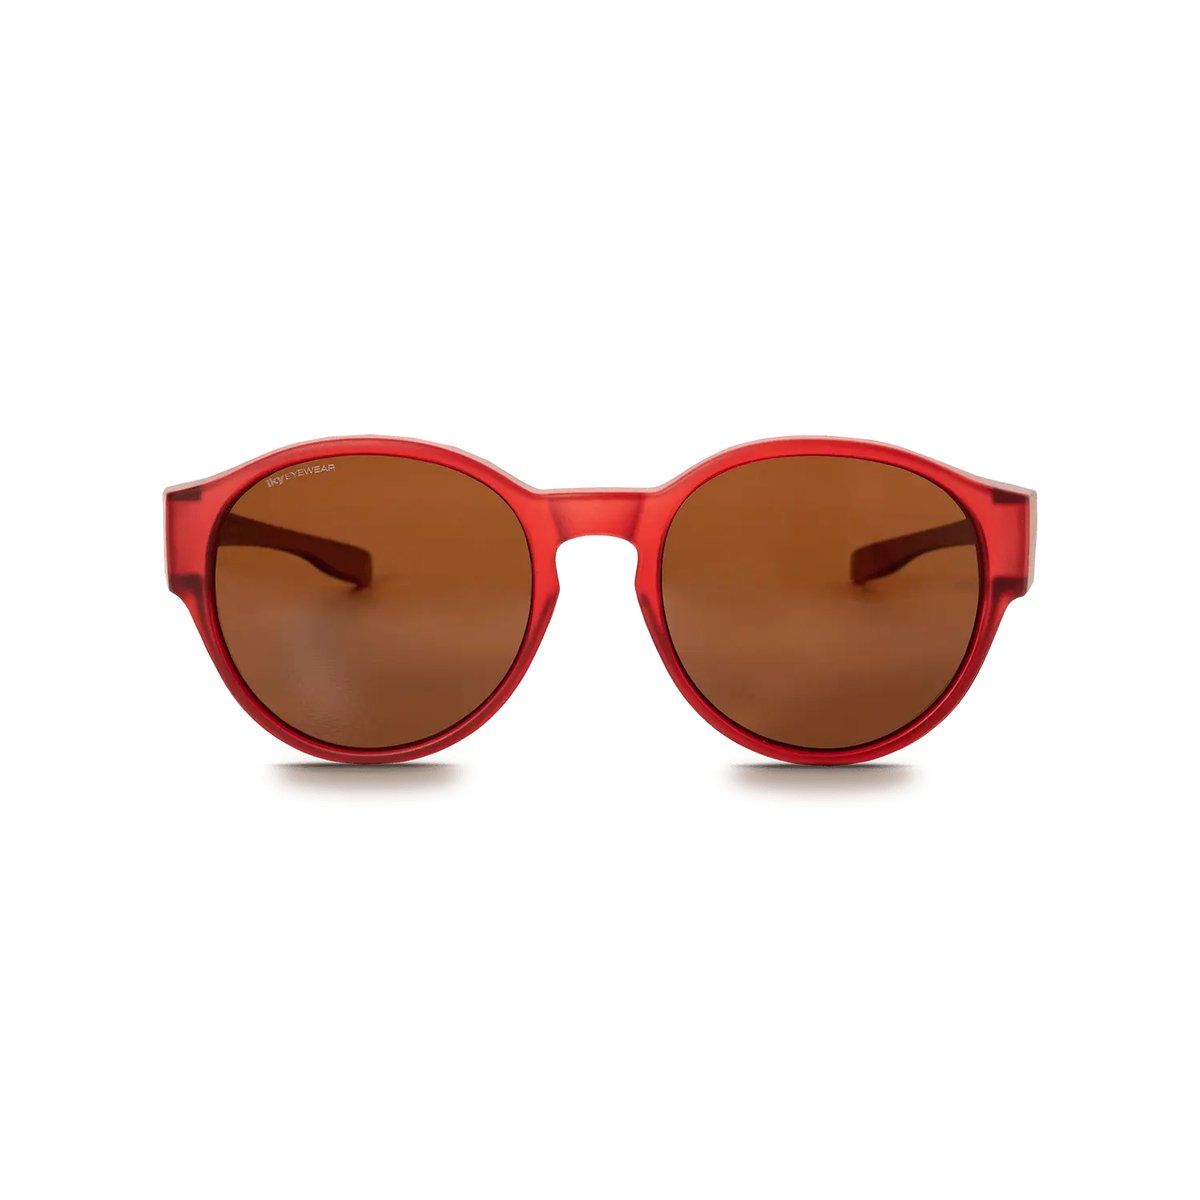 IKY EYEWEAR overzet zonnebril OB-1005C3-rood-semi-transaprant